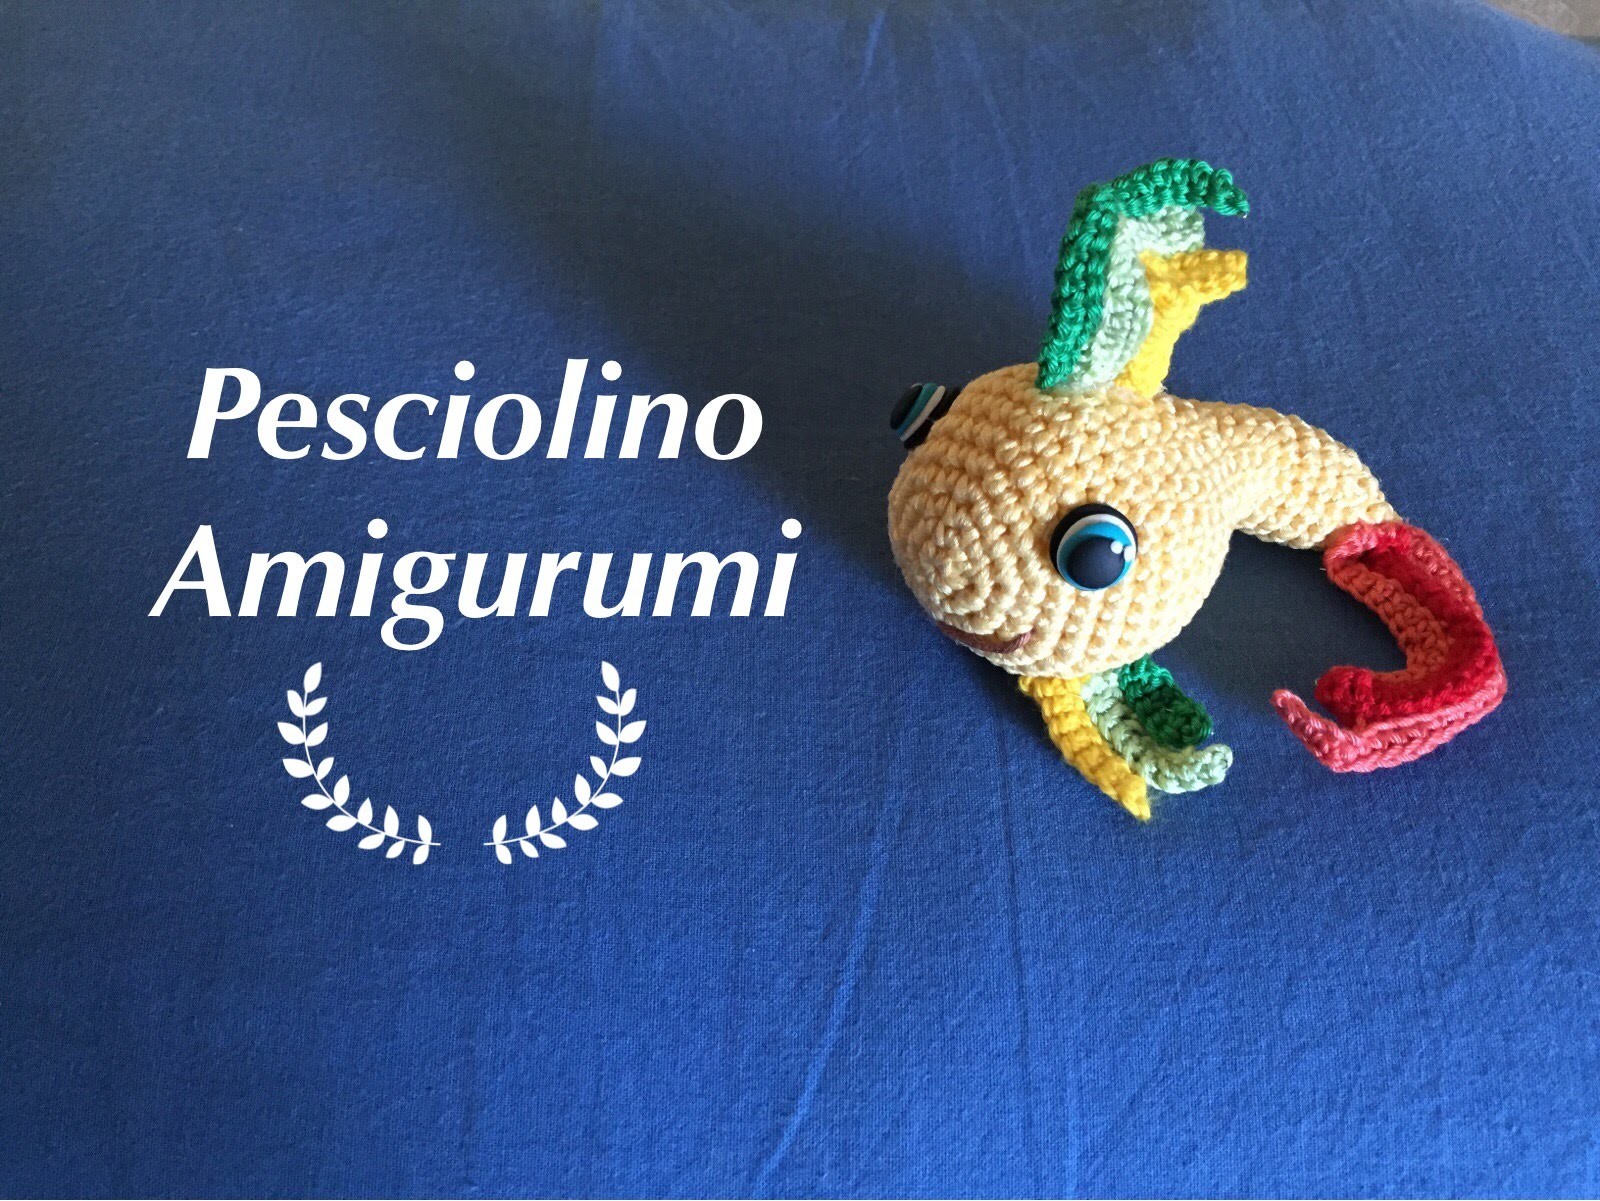 Pesciolino Amigurumi (tutorial)